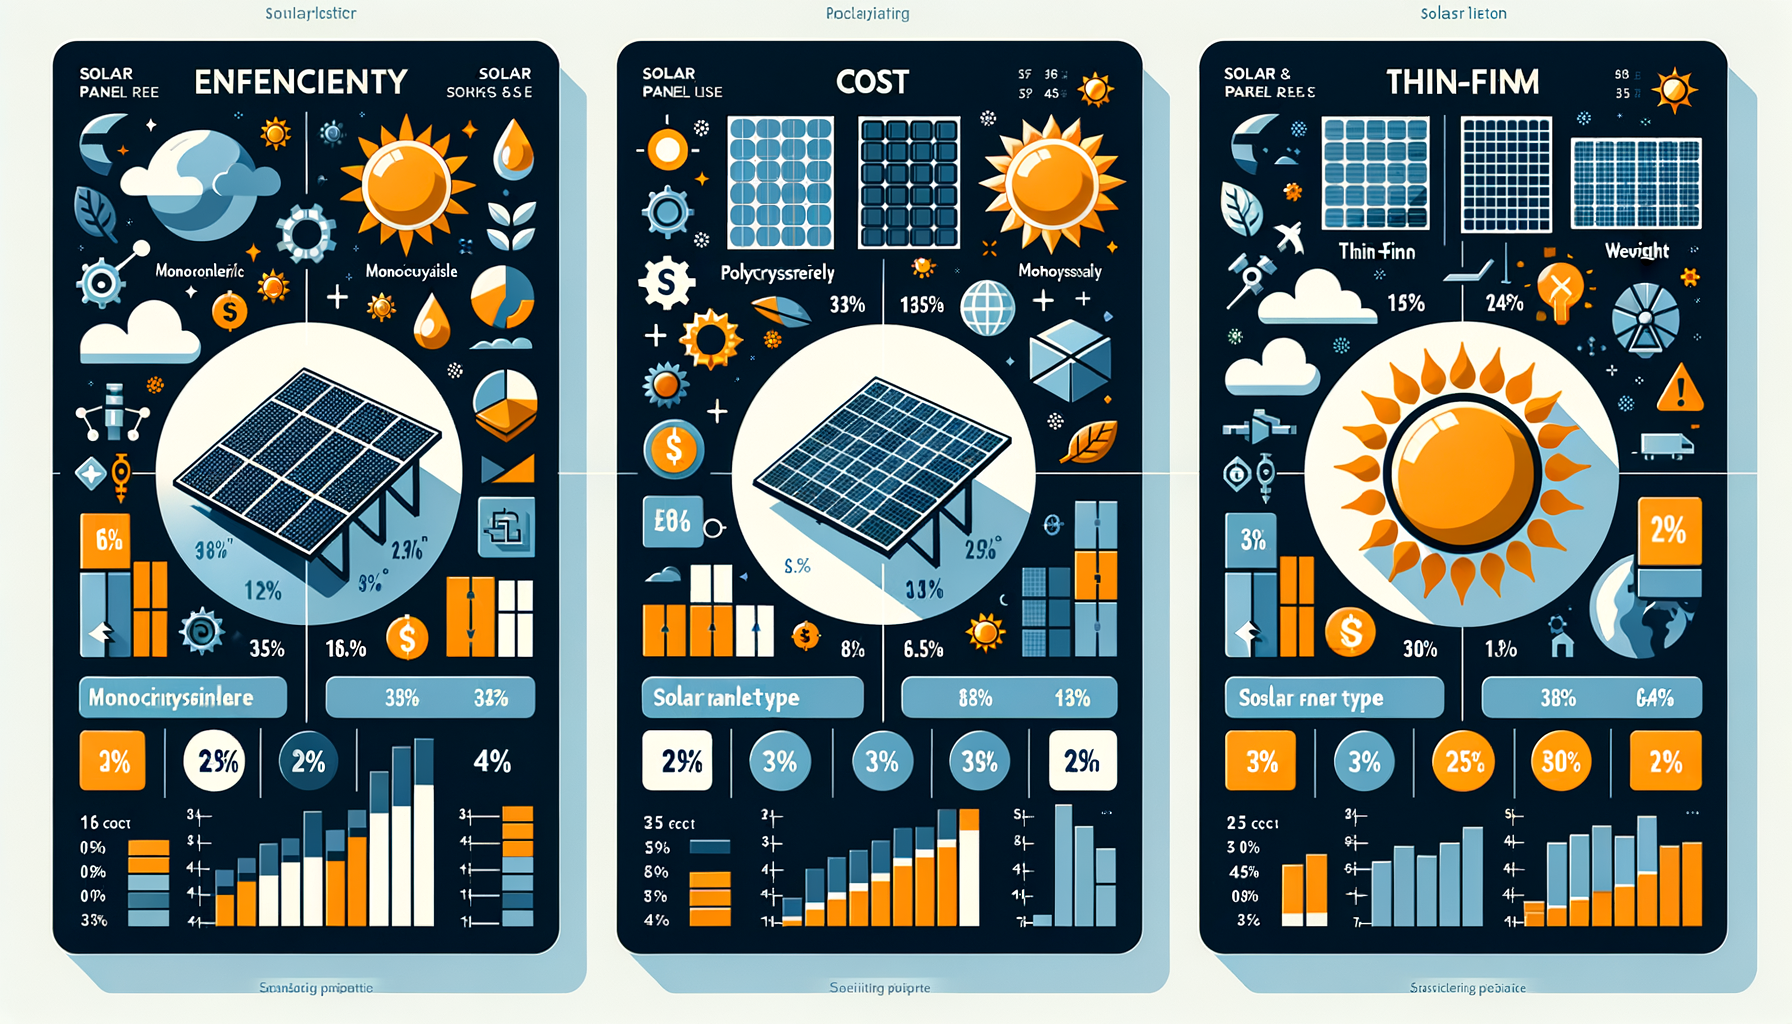 ALT: Comparison chart of different solar panel types